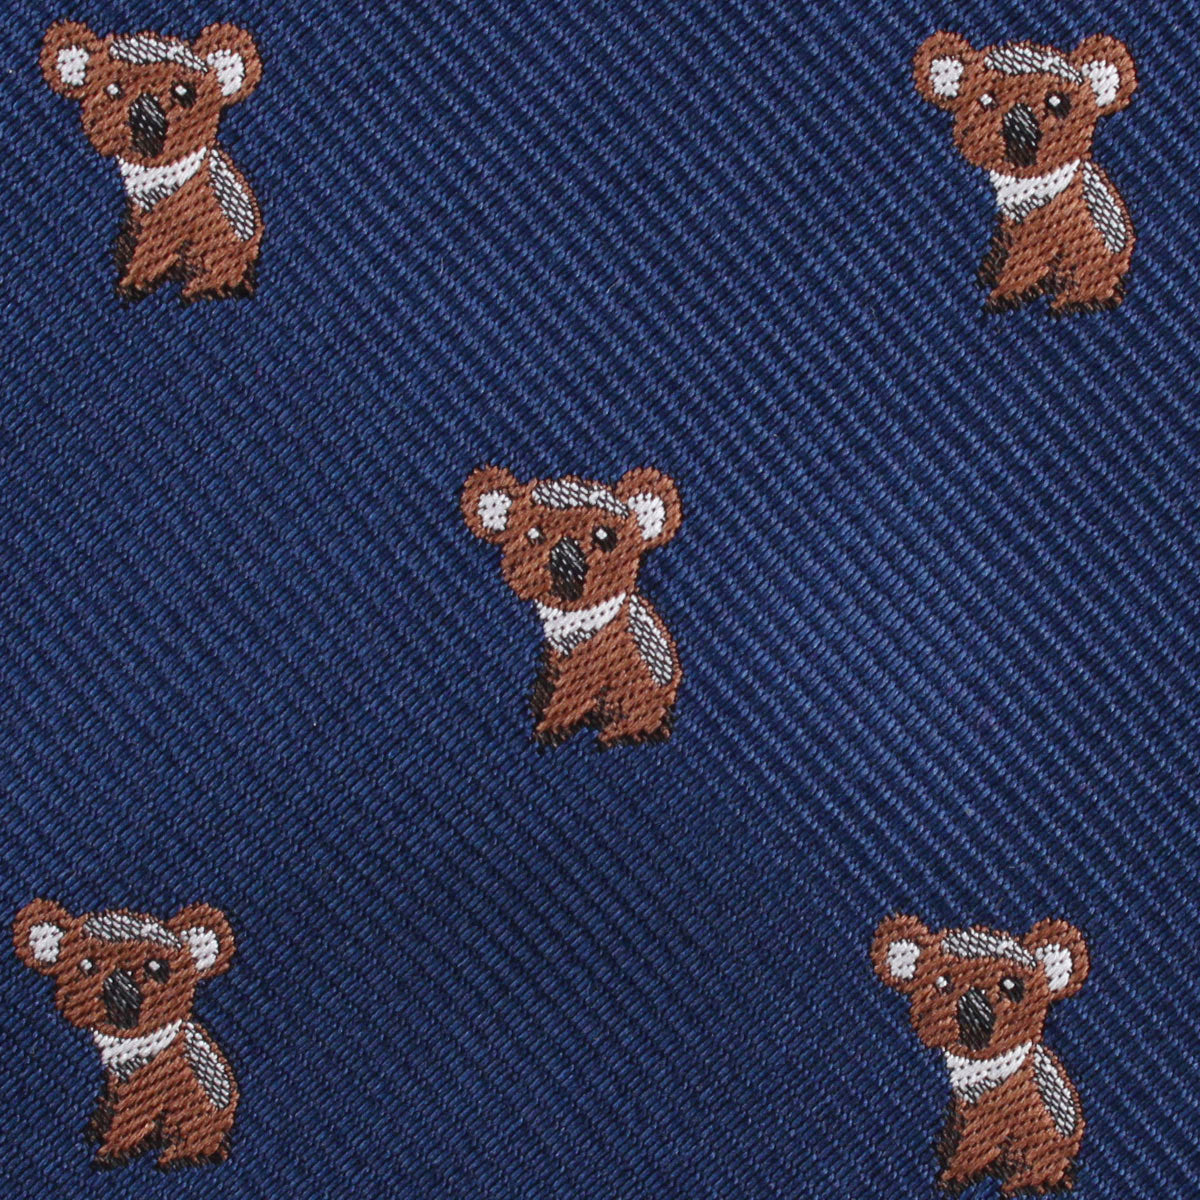 Koala Bear Fabric Necktie